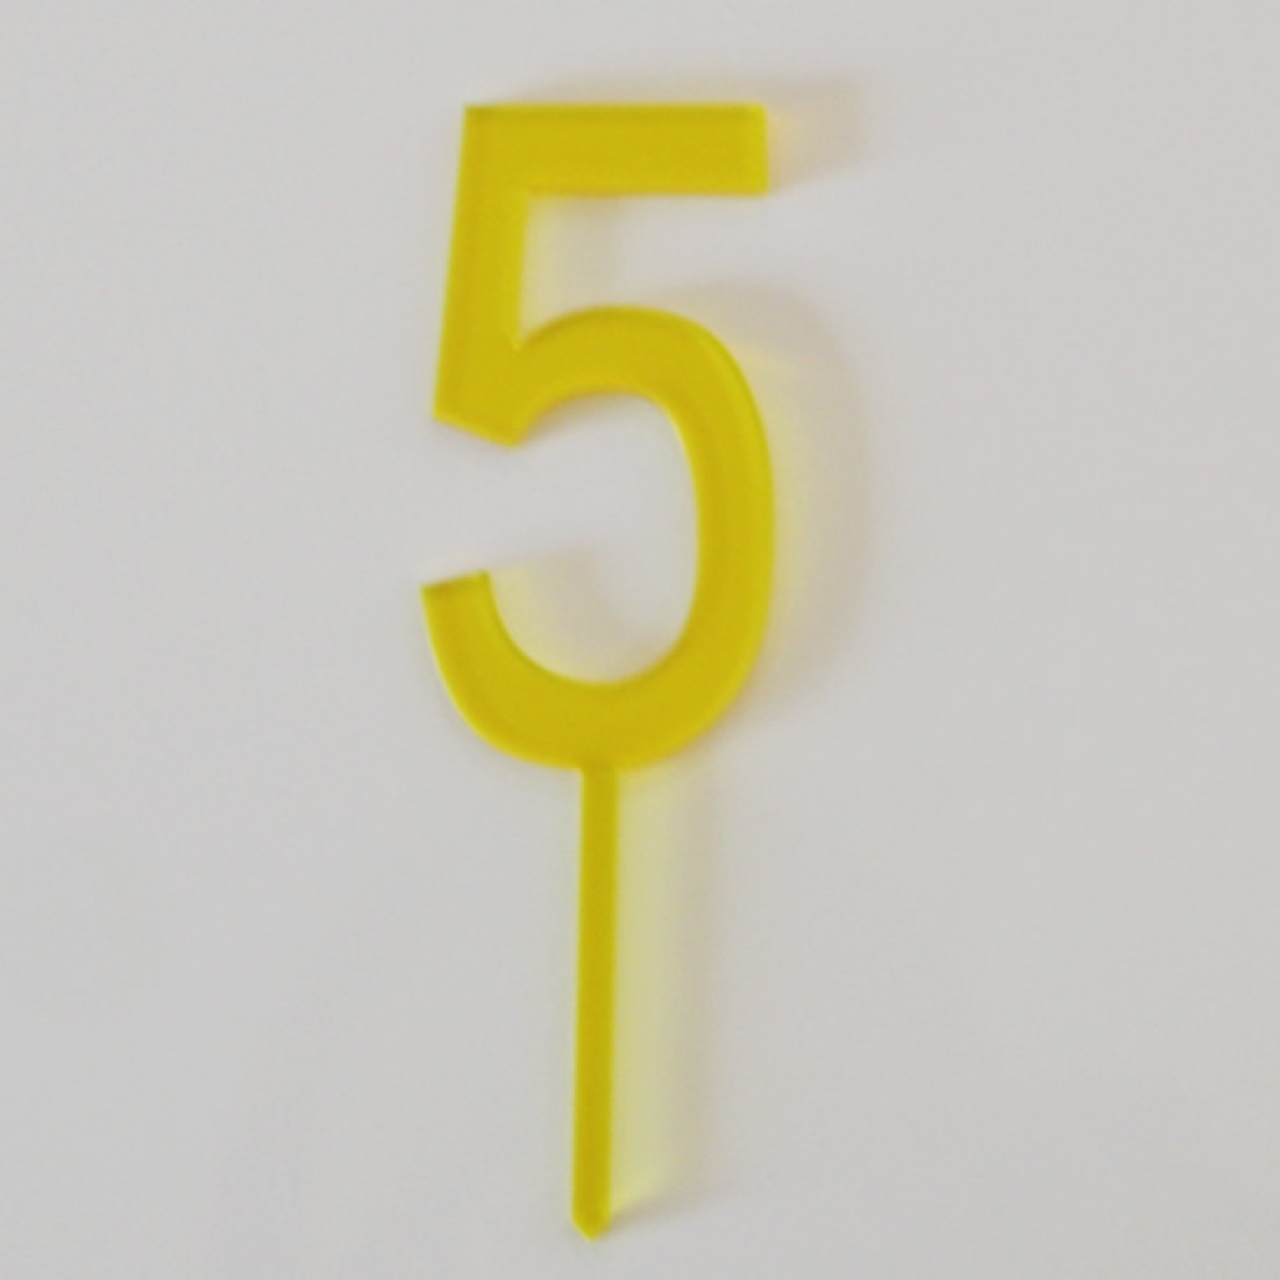 Meri Meri Torten Picker "Nummer 5", Gelb, 11 cm